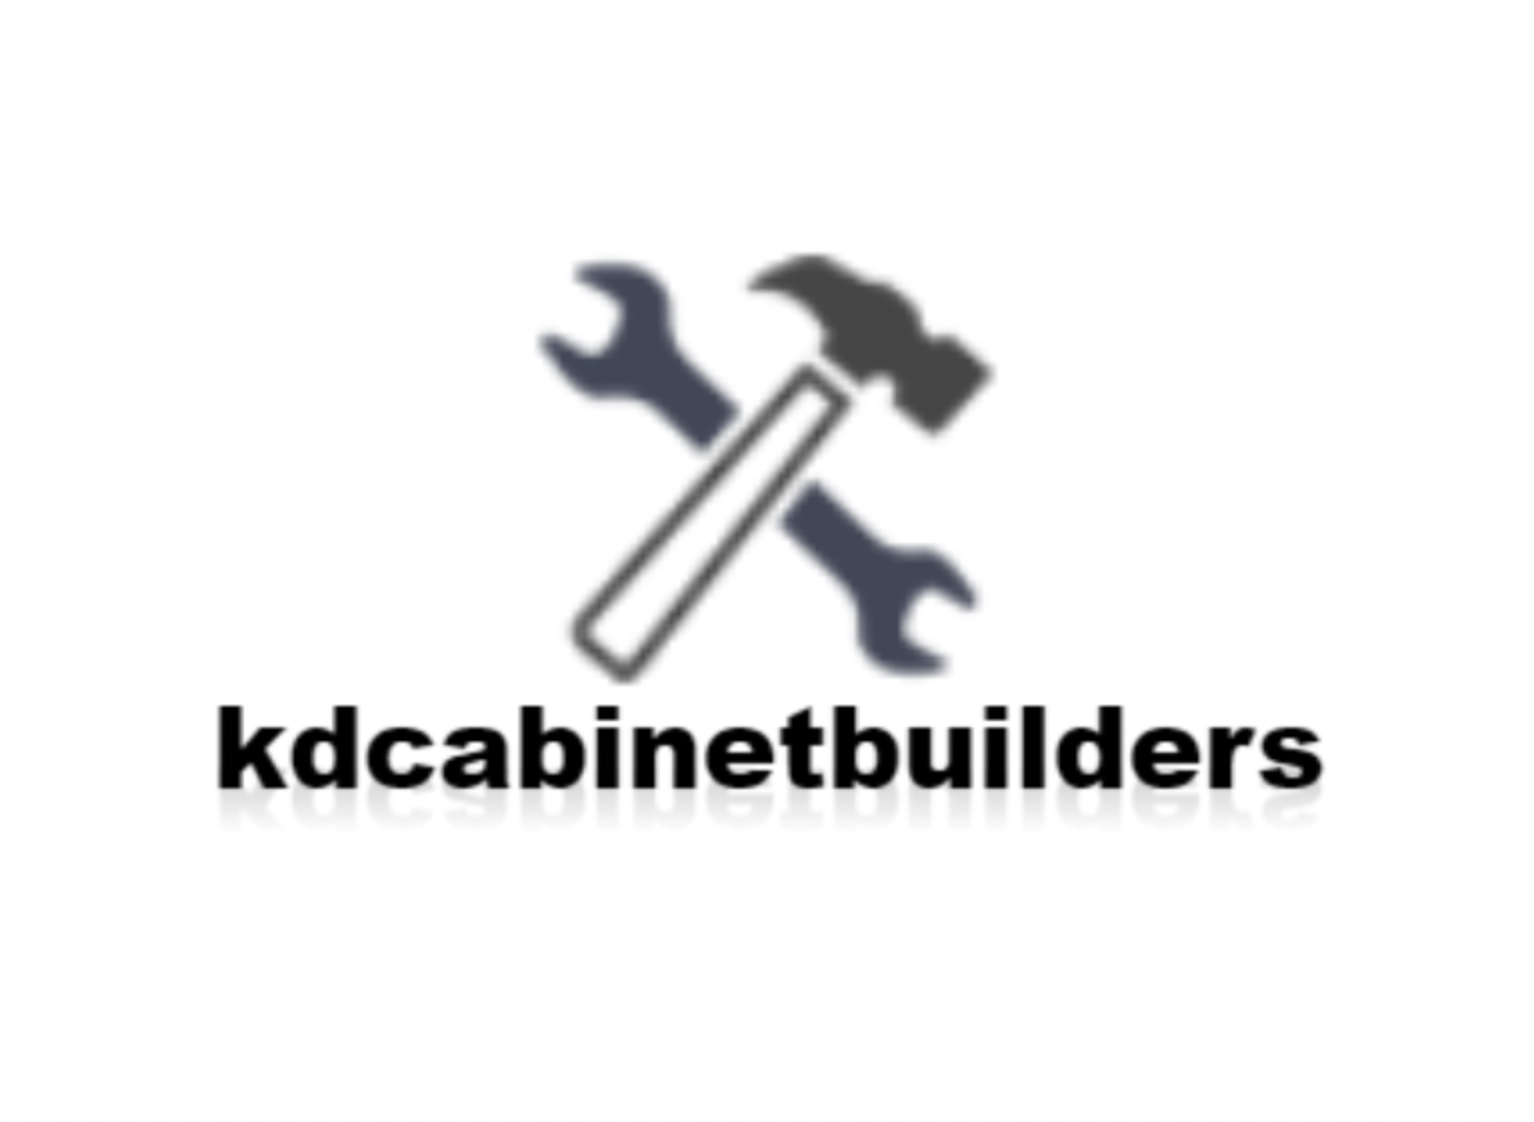 KD-Cabinet-Builders.png